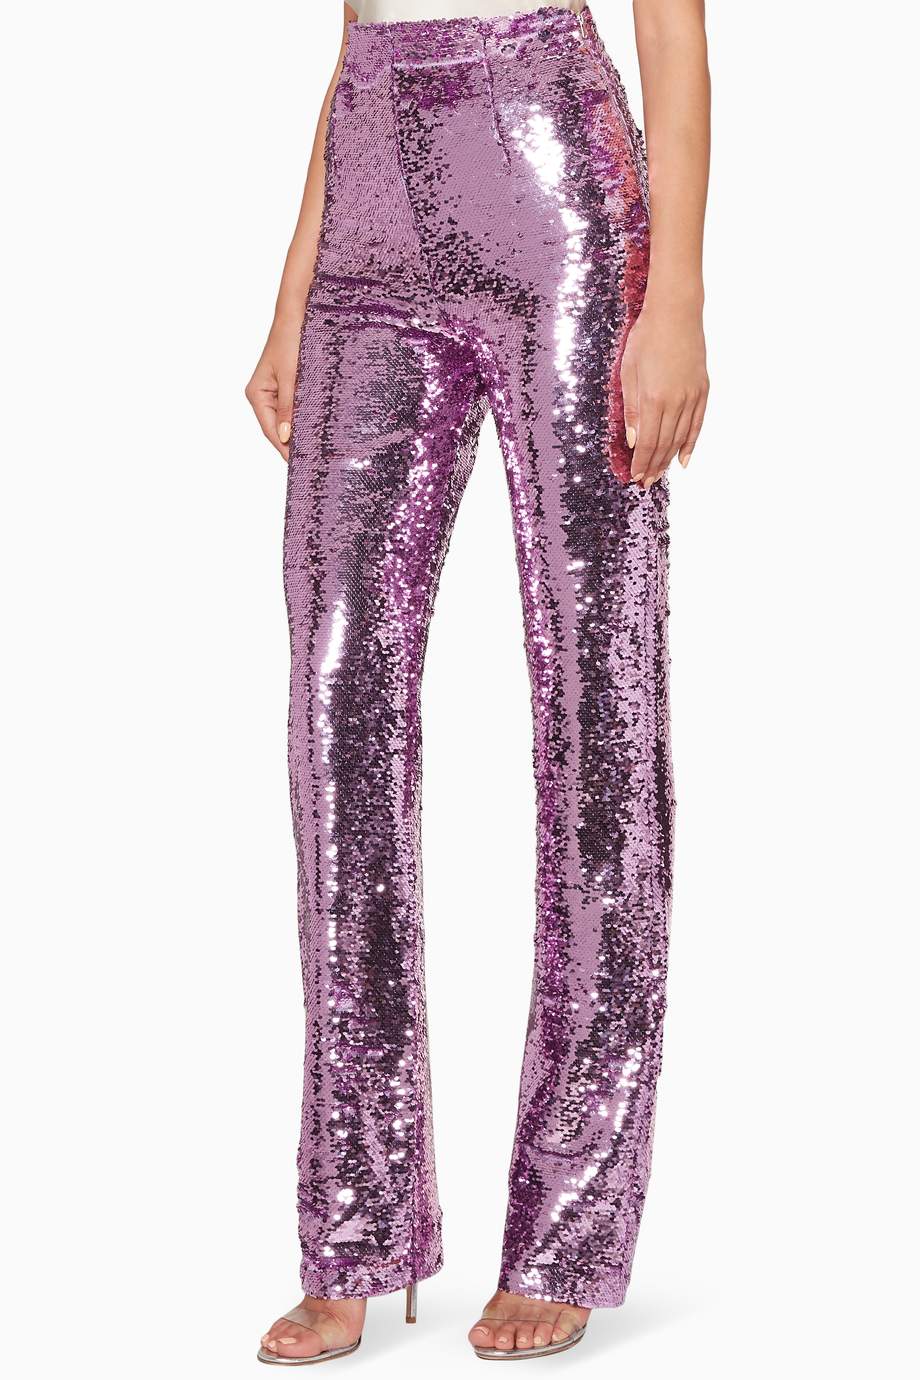 Shop 16 Arlington Purple Lilac Sequined Pants for Women | Ounass UAE